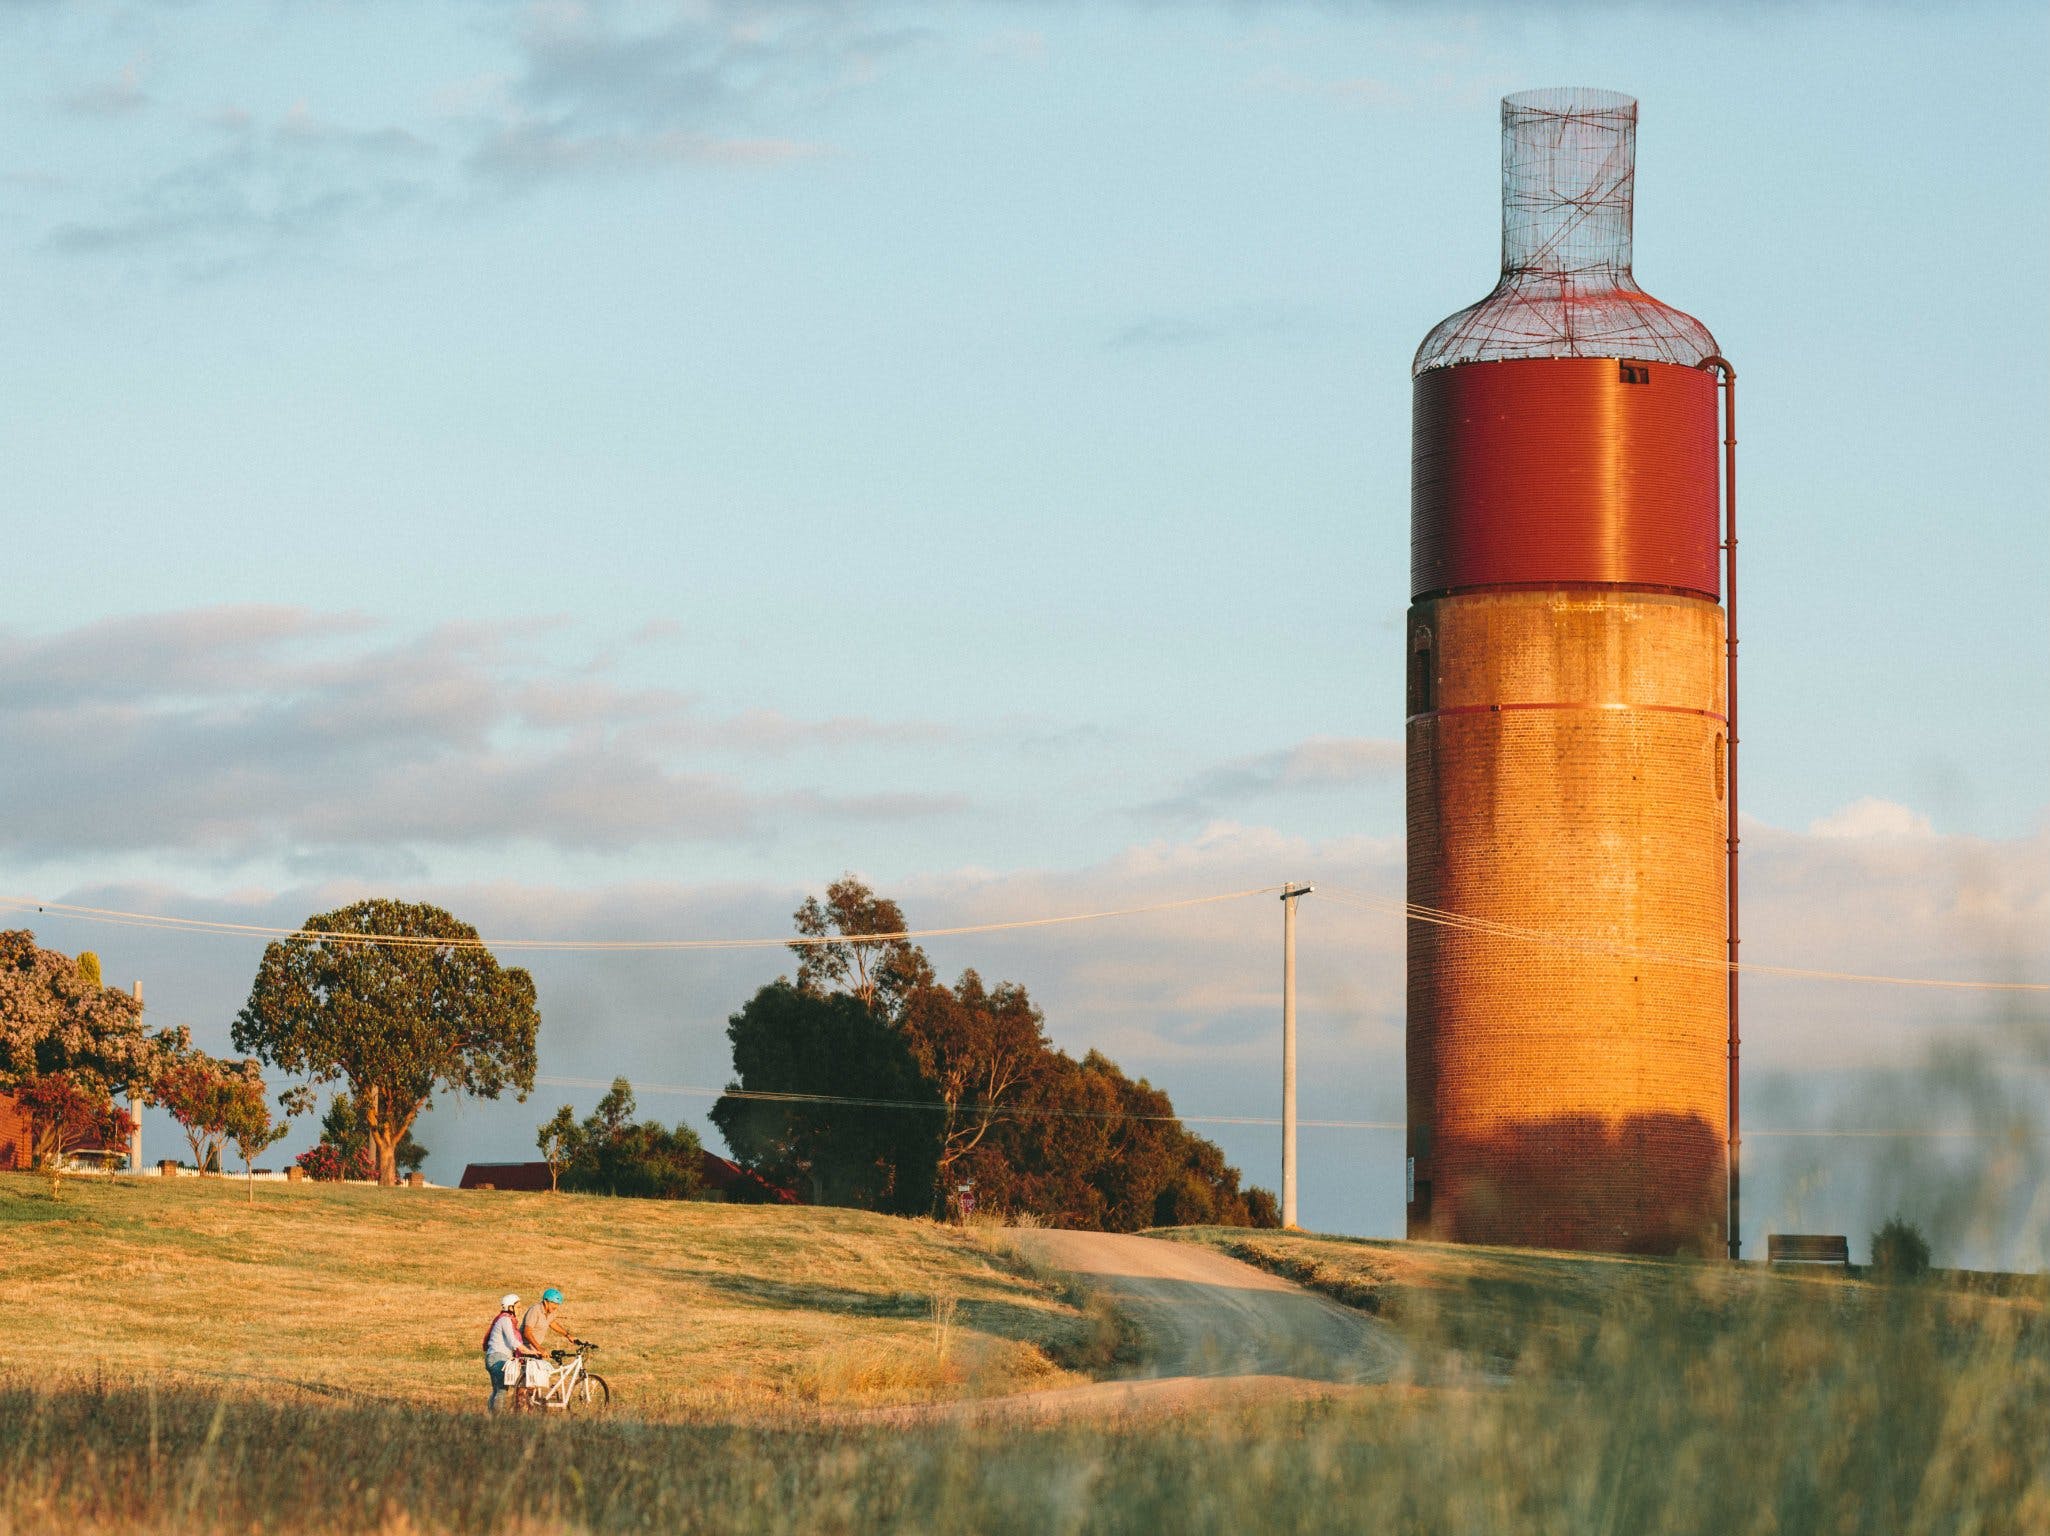 Rutherglen Wine Bottle - New South Wales Tourism 